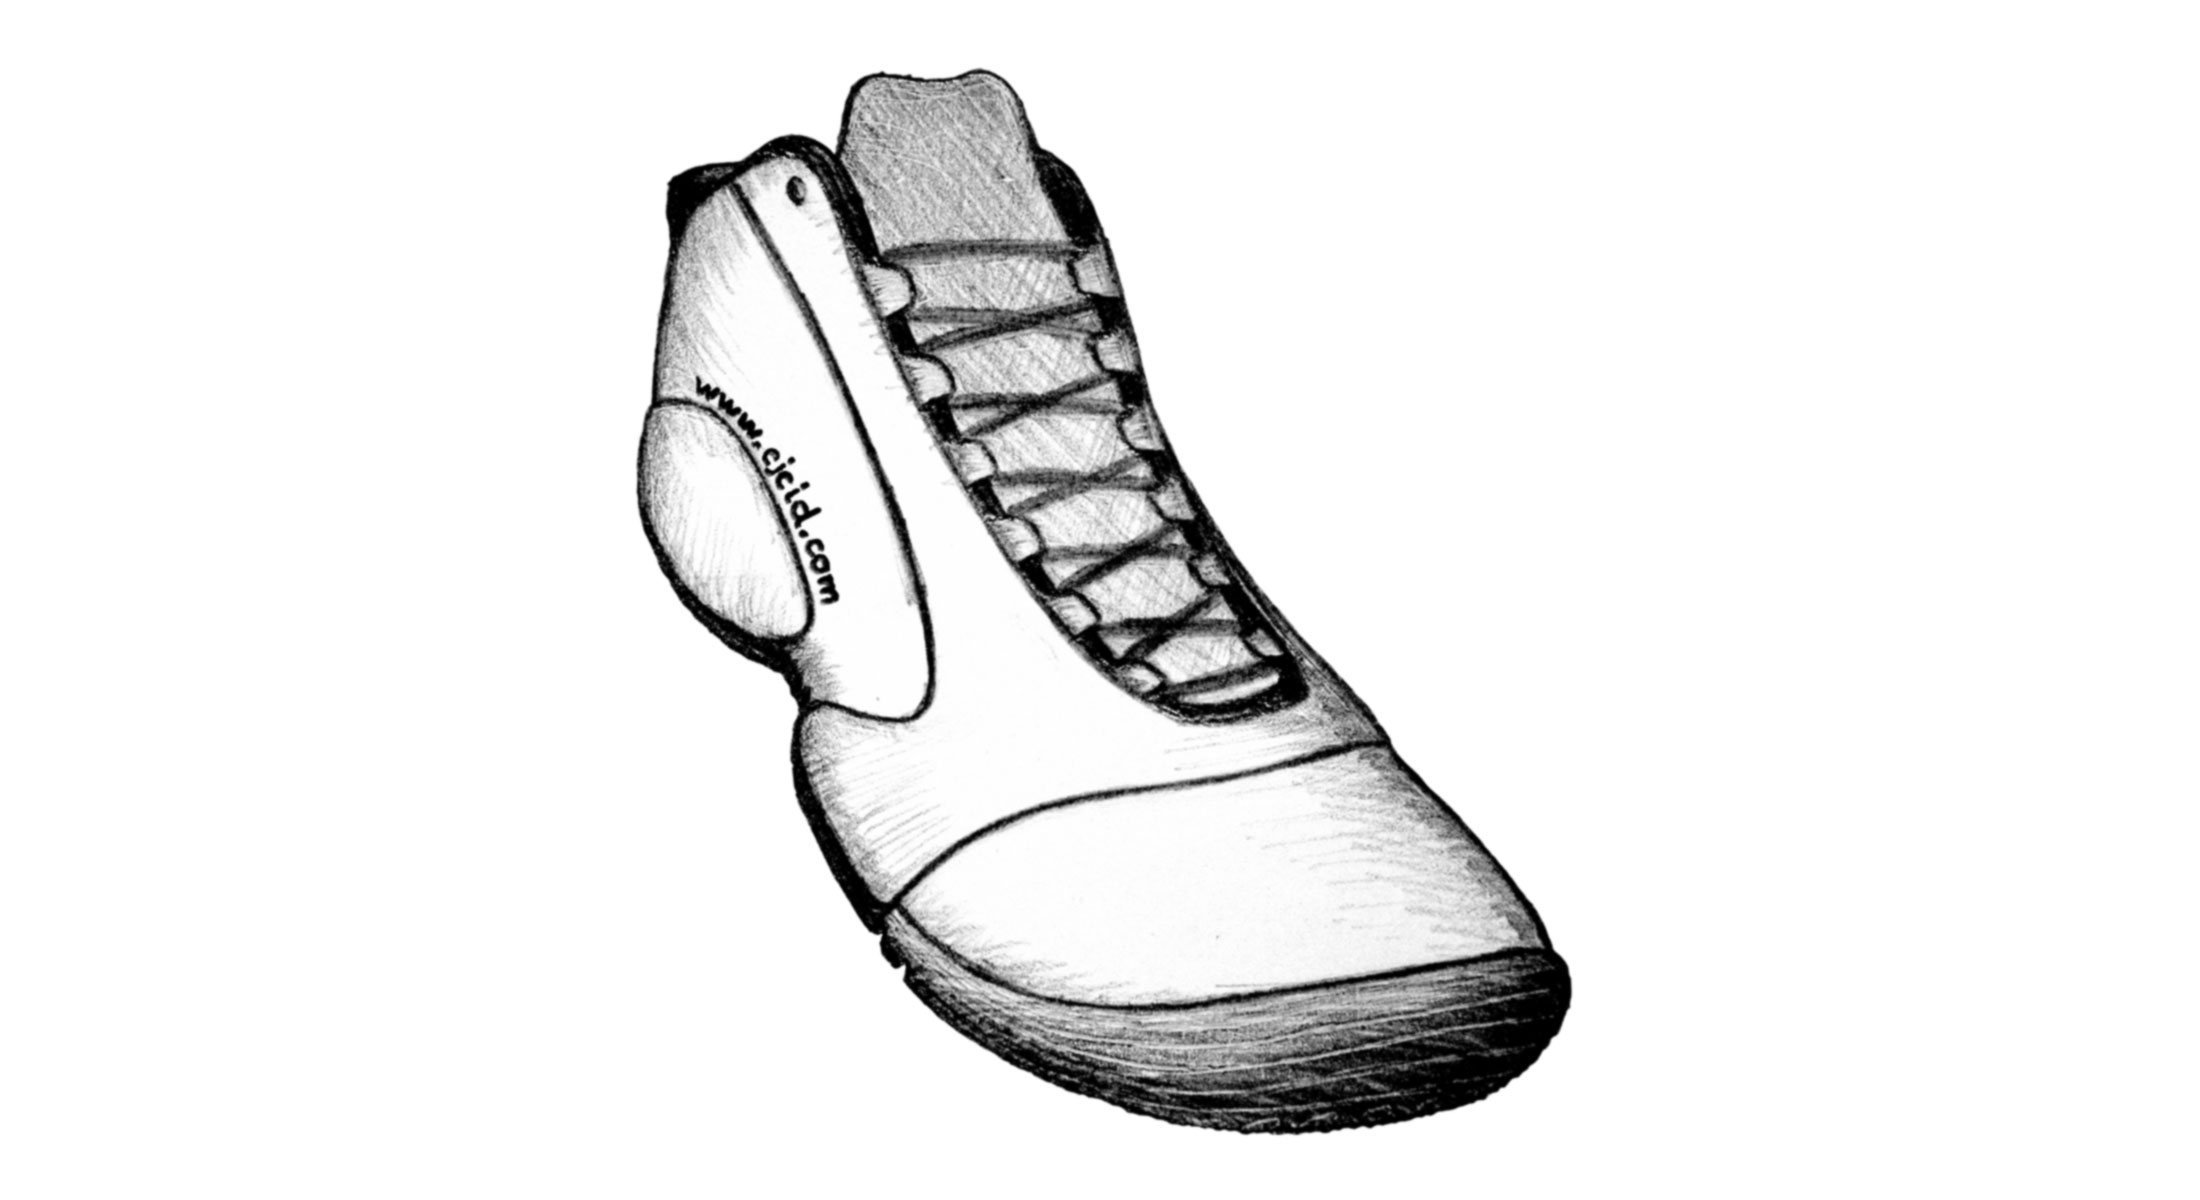 Illustration for the basketball shoe “CJ Rad GT”